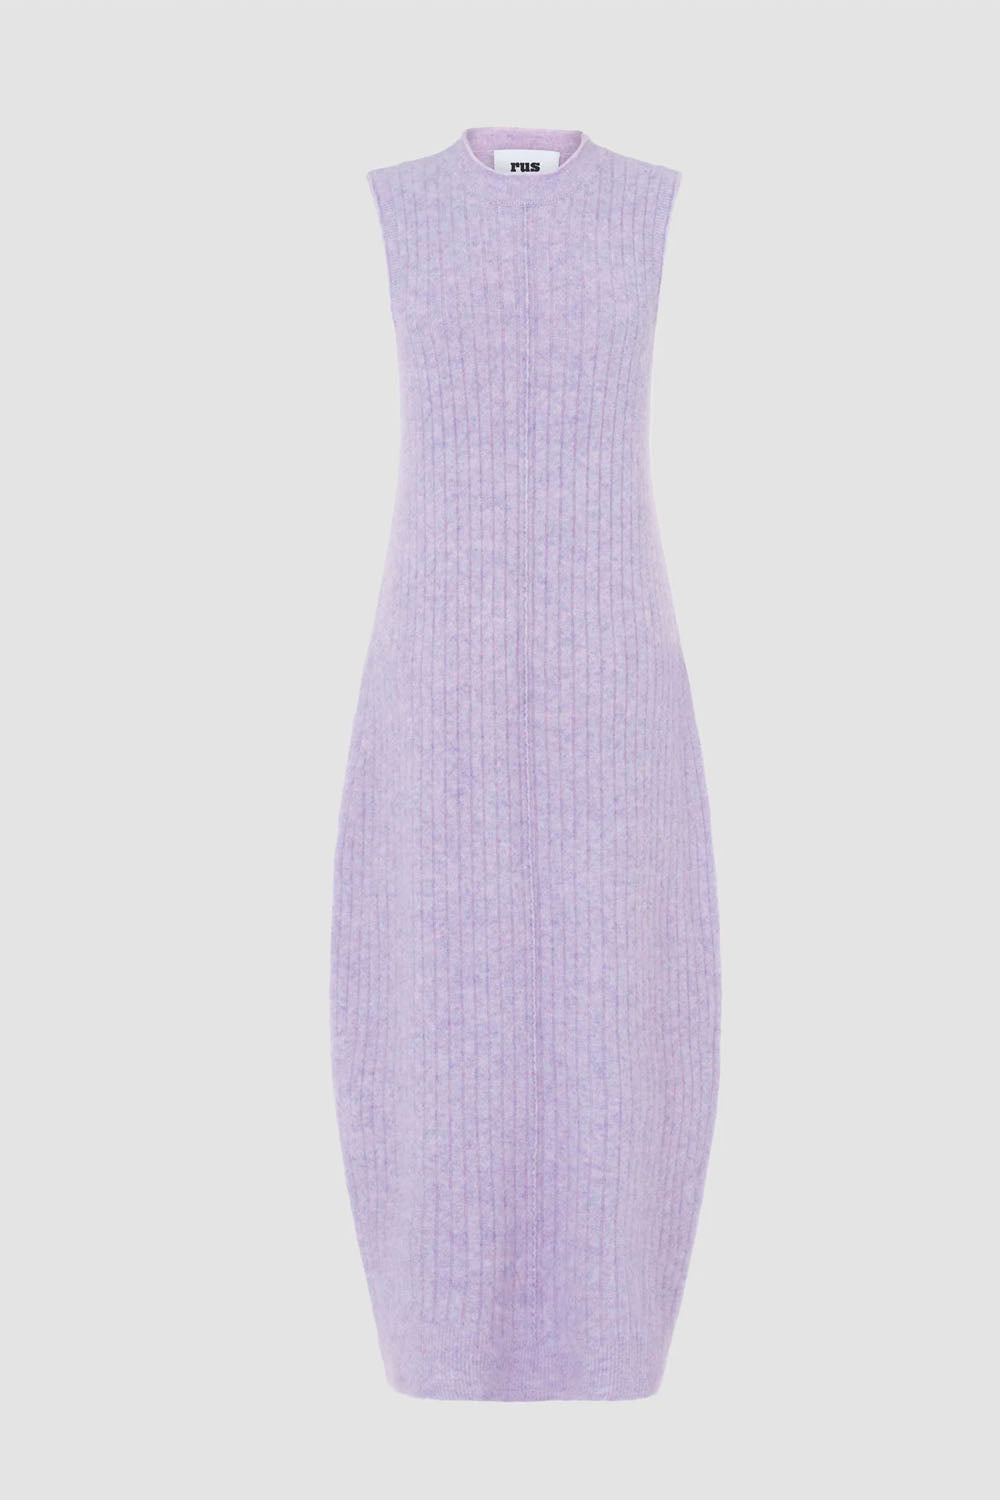 Rus - Ginga Dress: Lavender